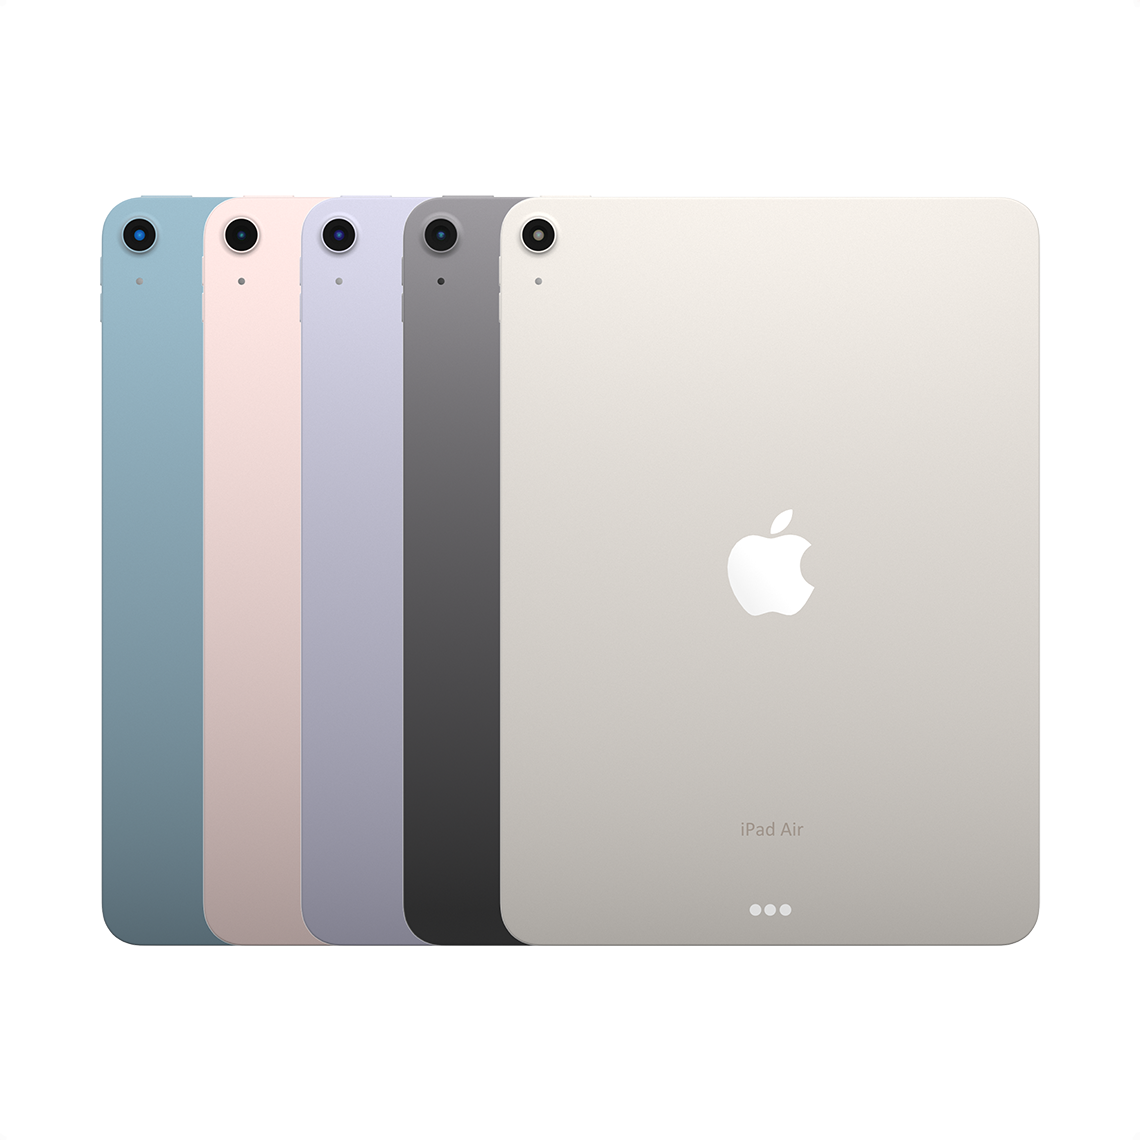 iPad Air 5th Generation (Parent Product)